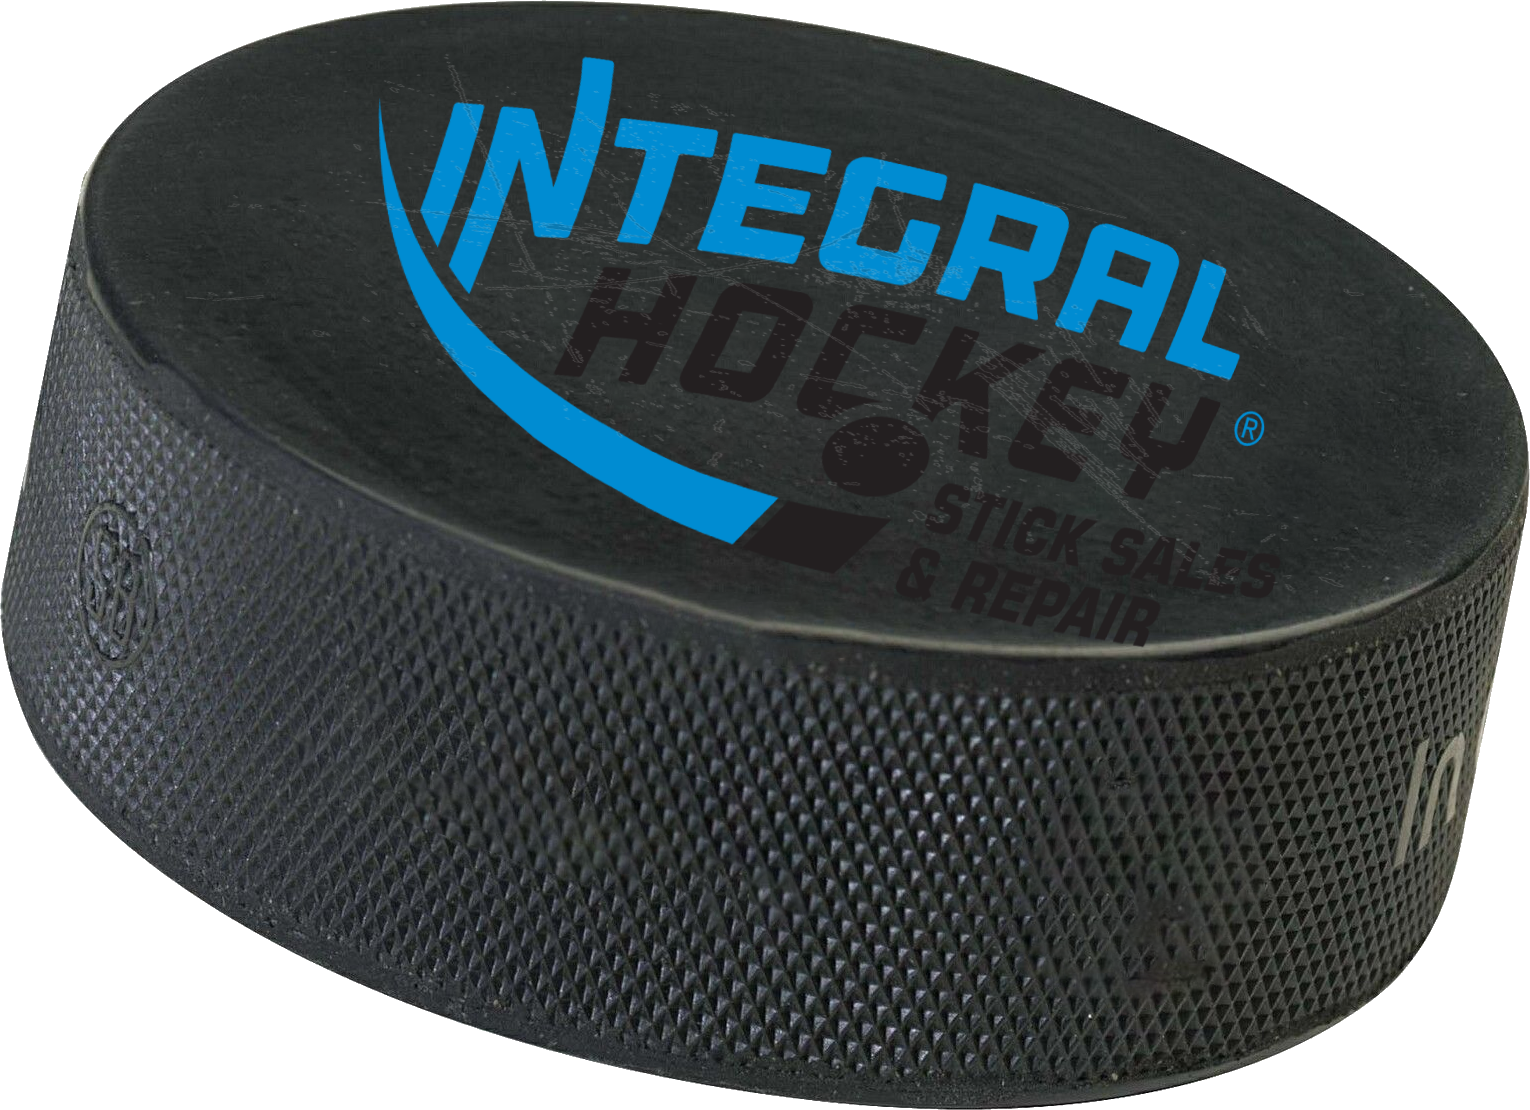 Integral Hockey Puck